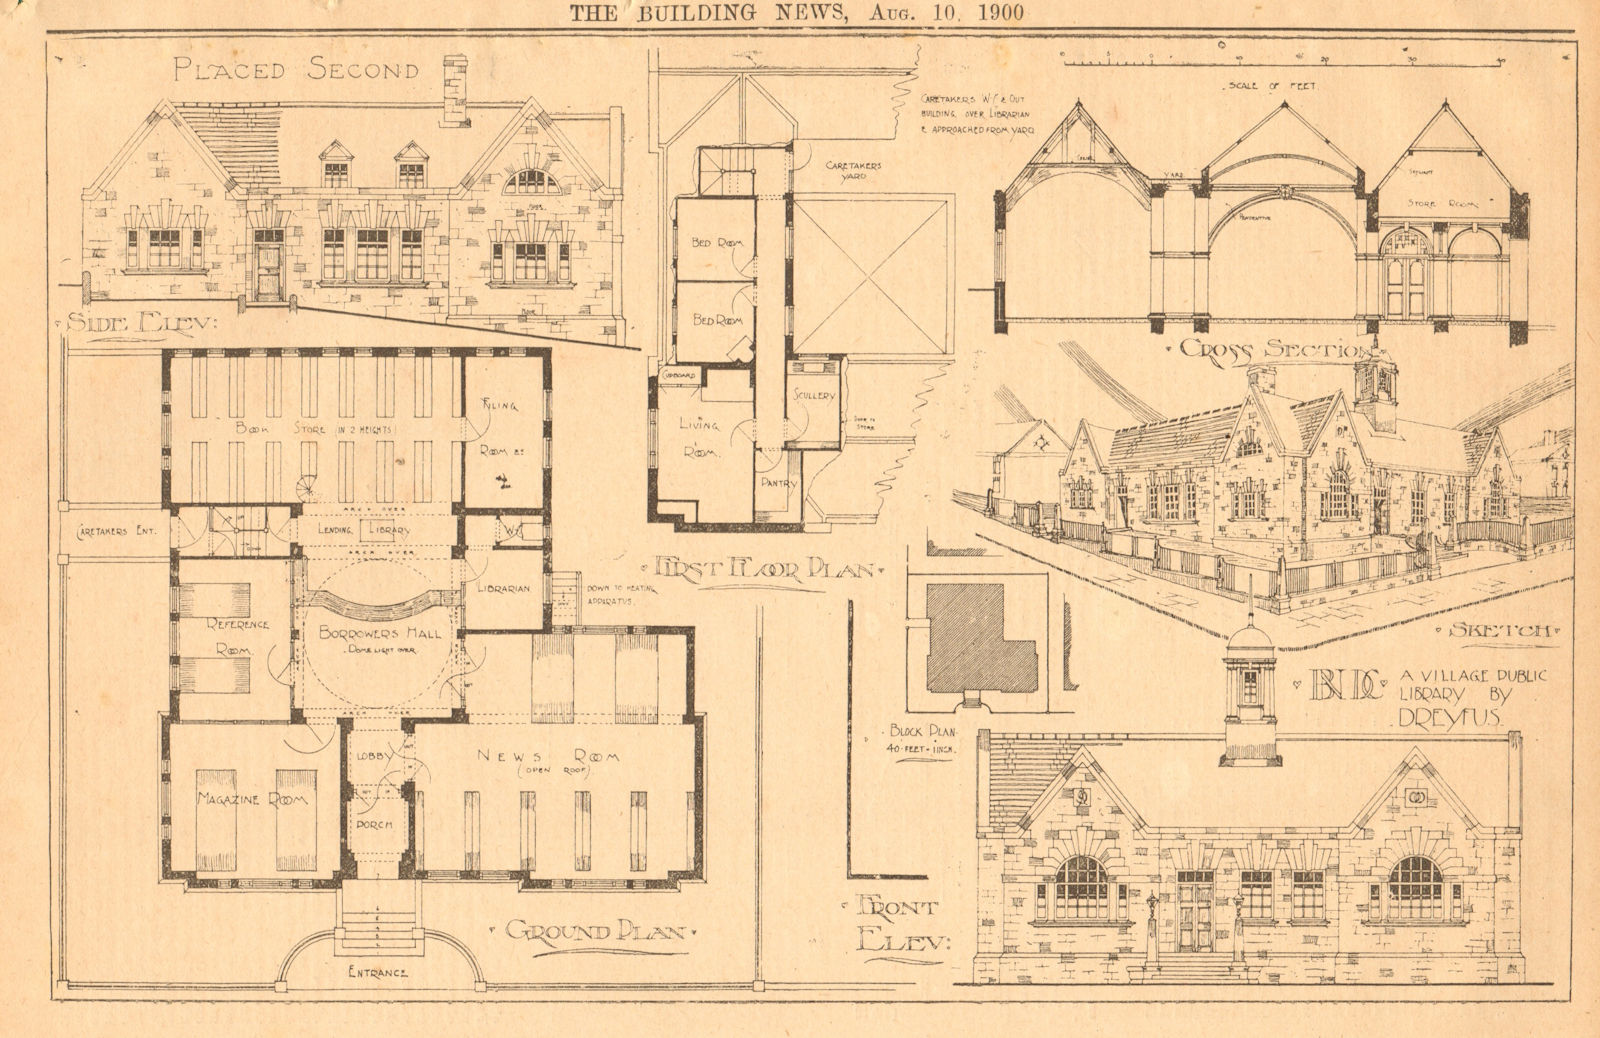 Associate Product A village Public Library by Dreyfus. Ground floor, 1st floor plan 1900 print